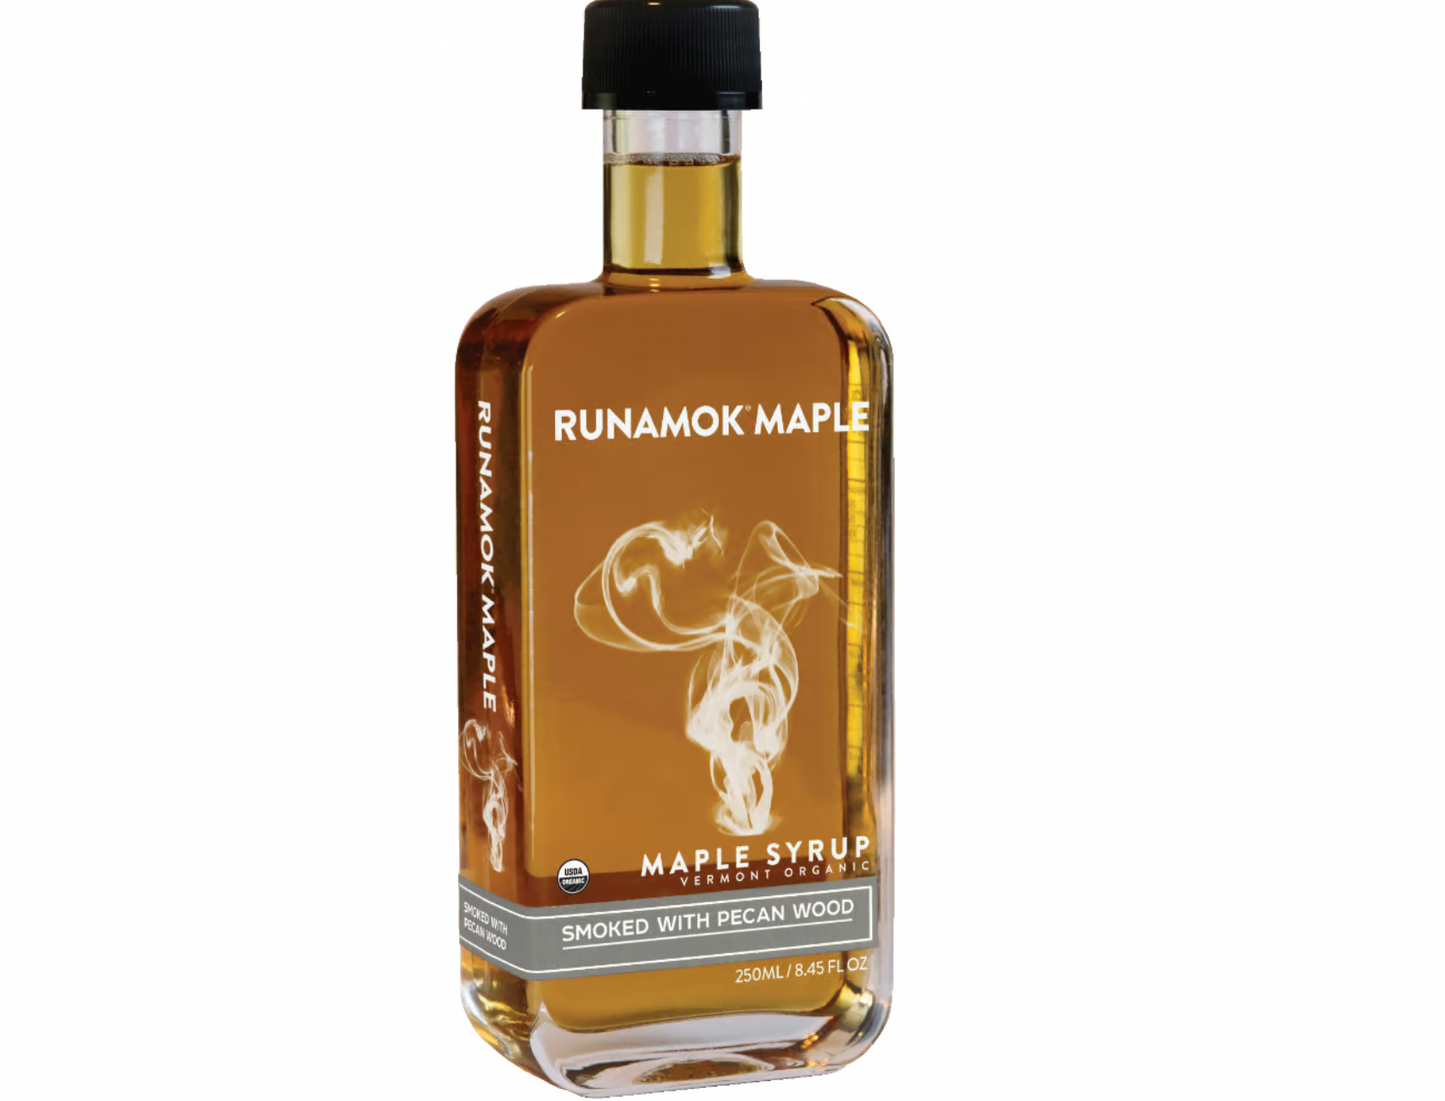 Runamok Maple Pecan Wood Smoked Maple Syrup